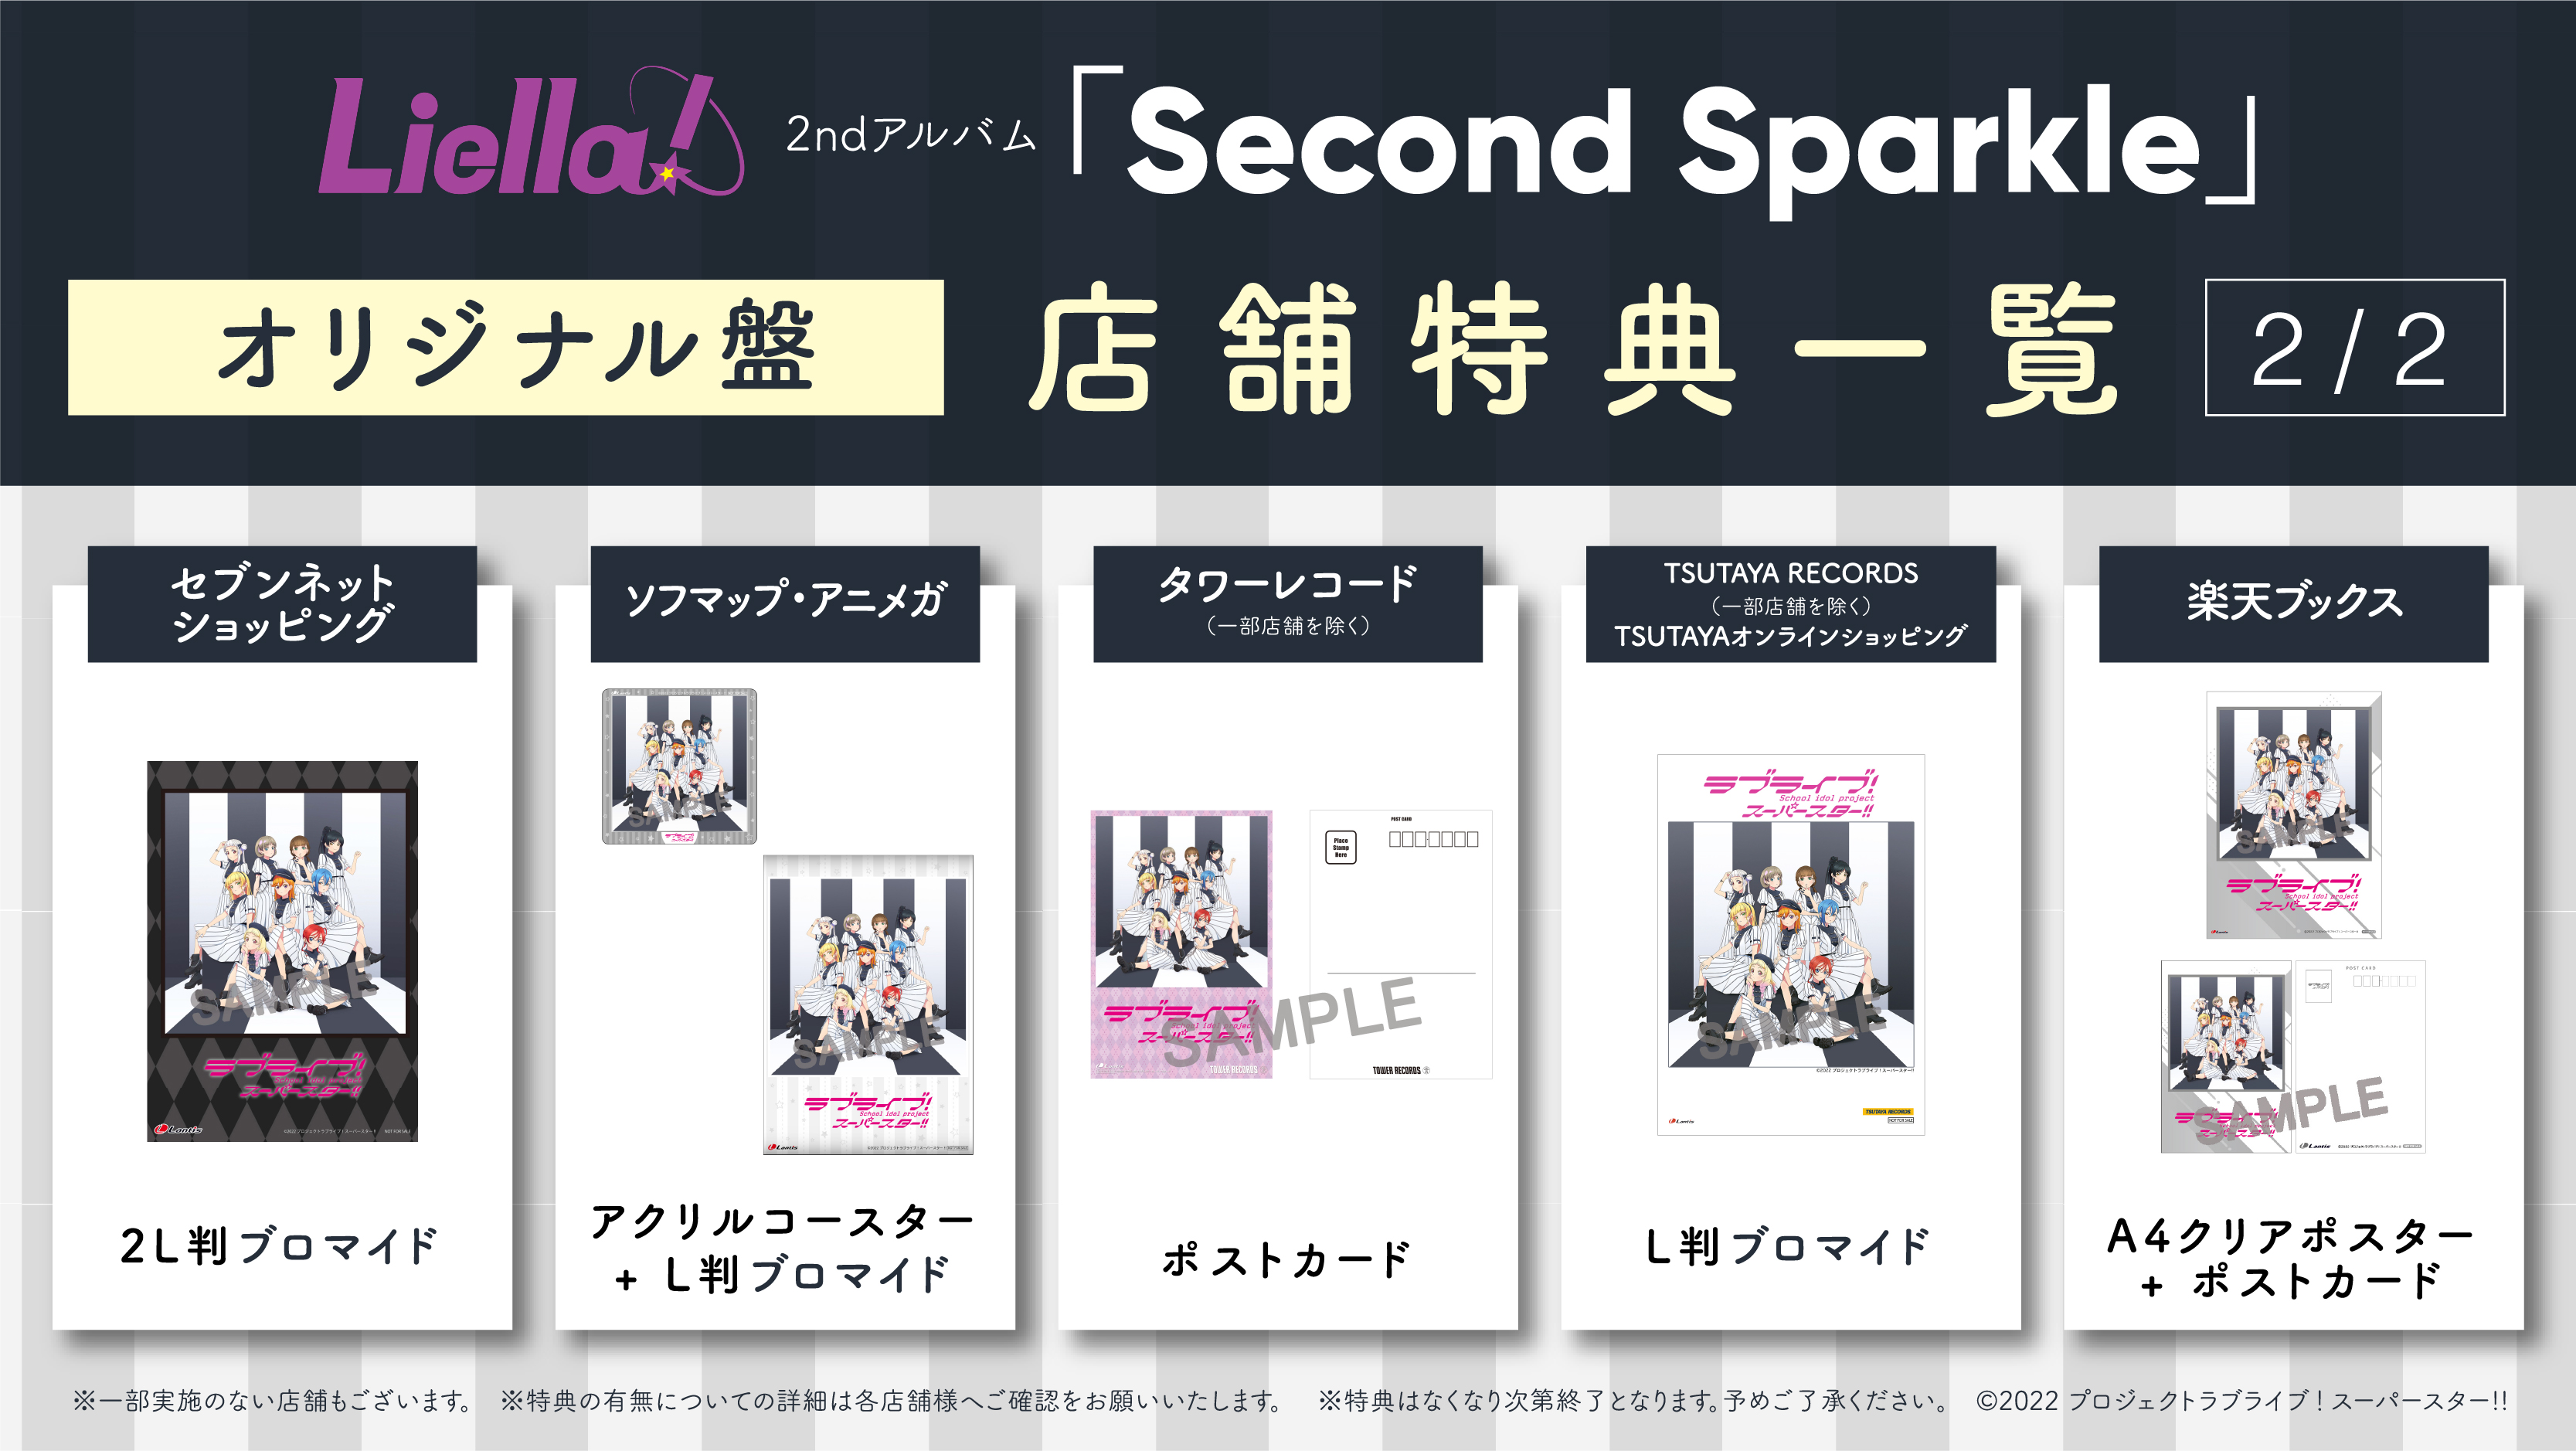 Liella! 2ndアルバム Second Sparkle 抽選会 B賞-